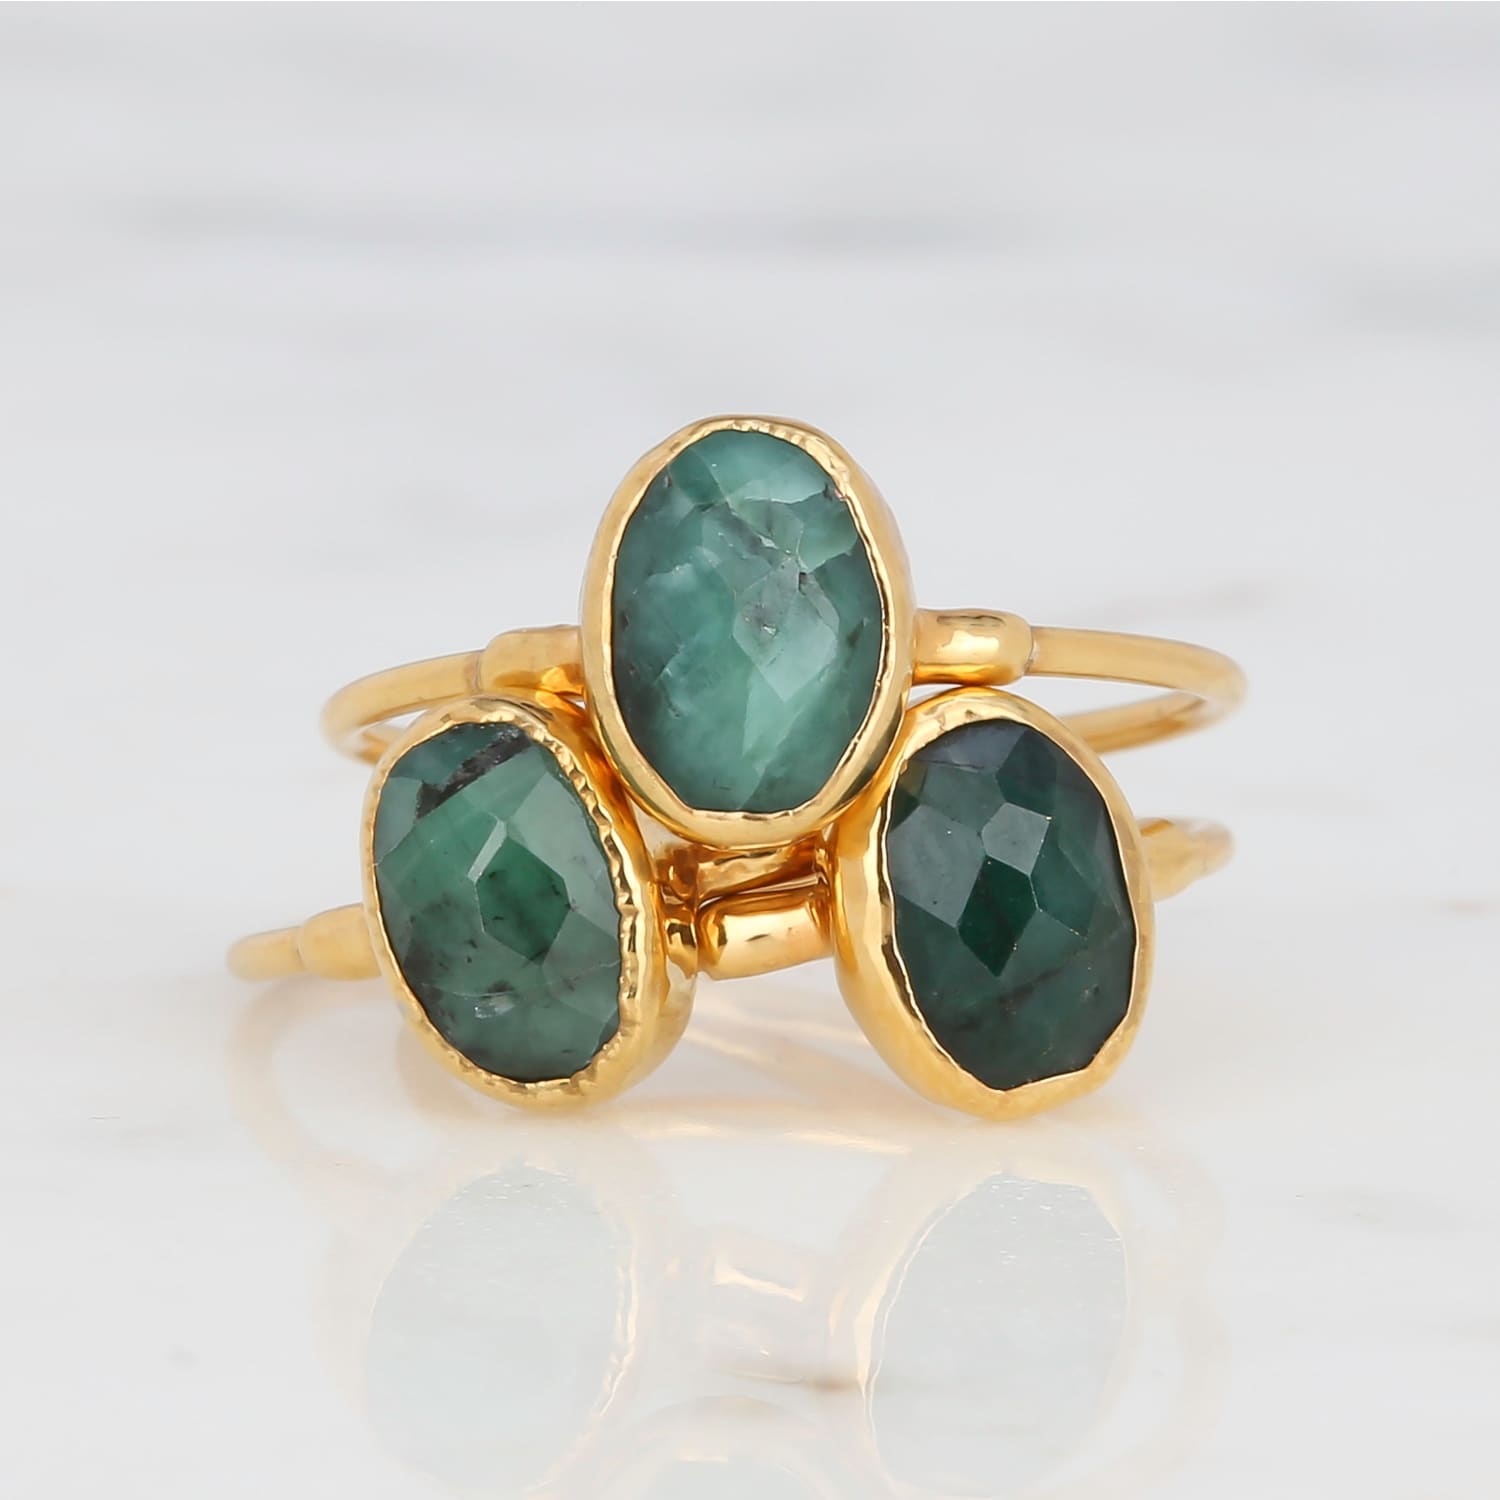 Oval Rosecut Raw Emerald Ring Gemstone Jewelry Rough Crystal